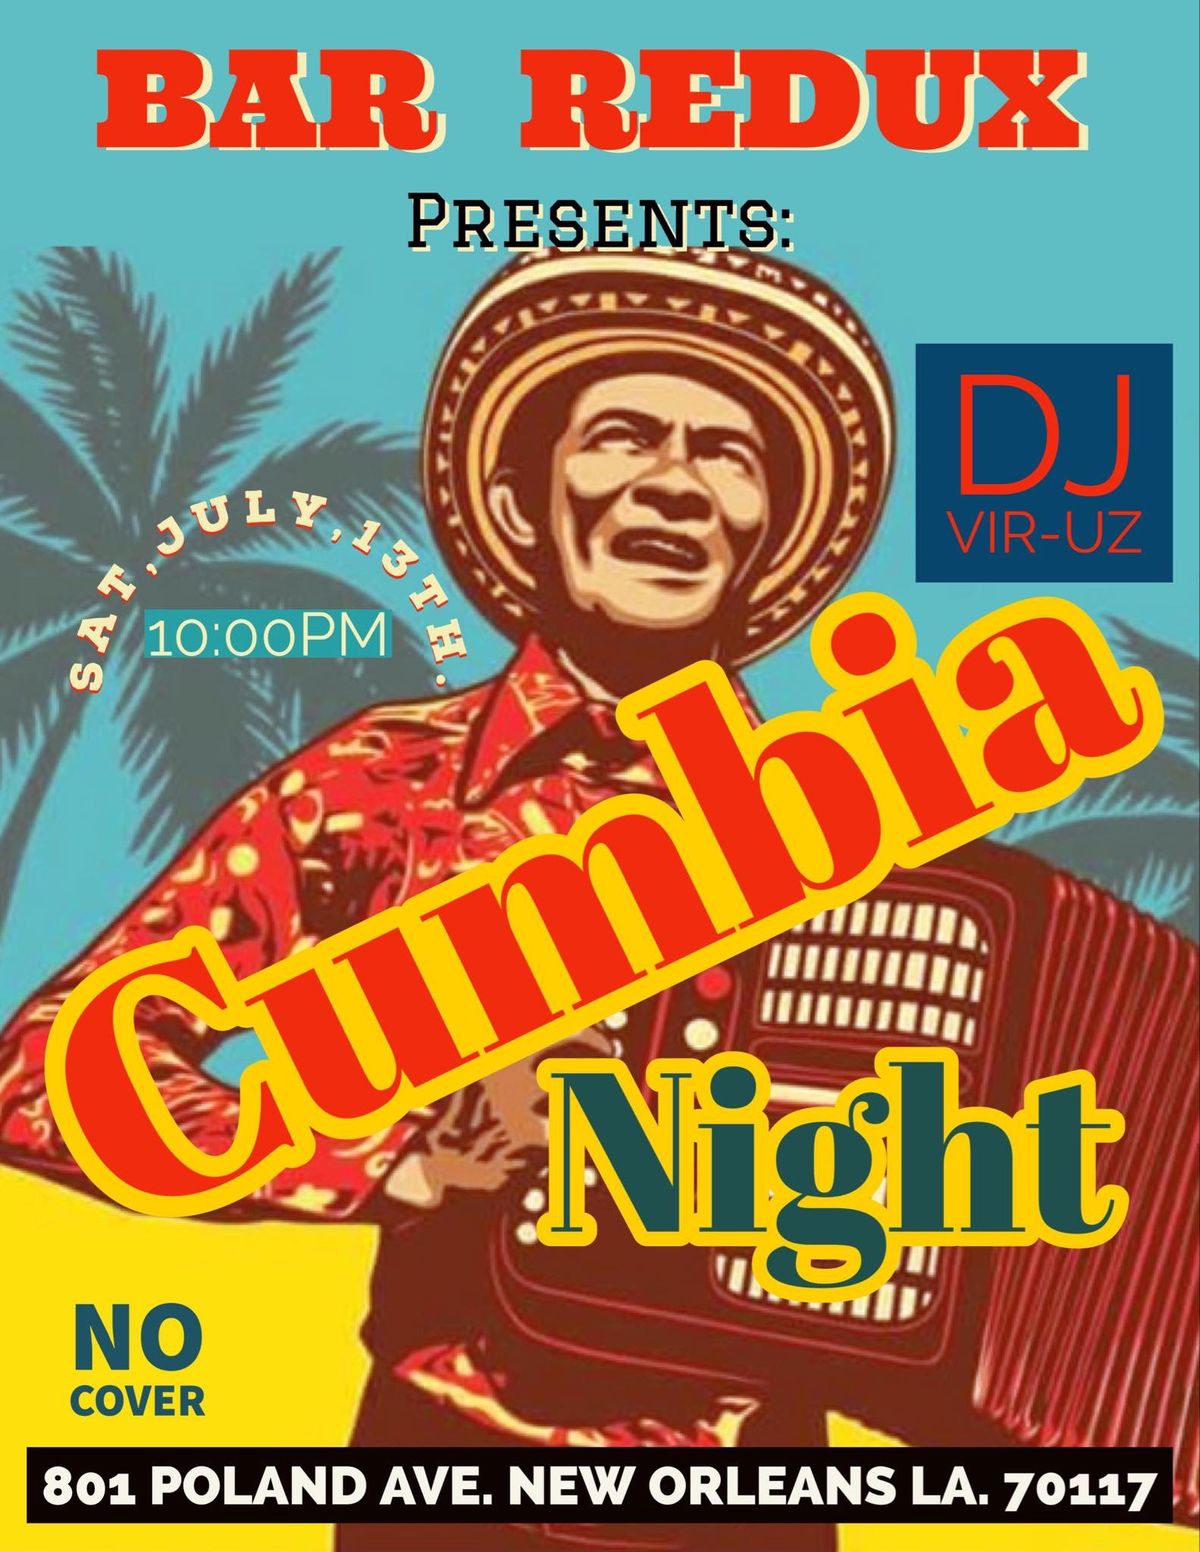 CUMBIA NIGHT: DJ VIR UZ